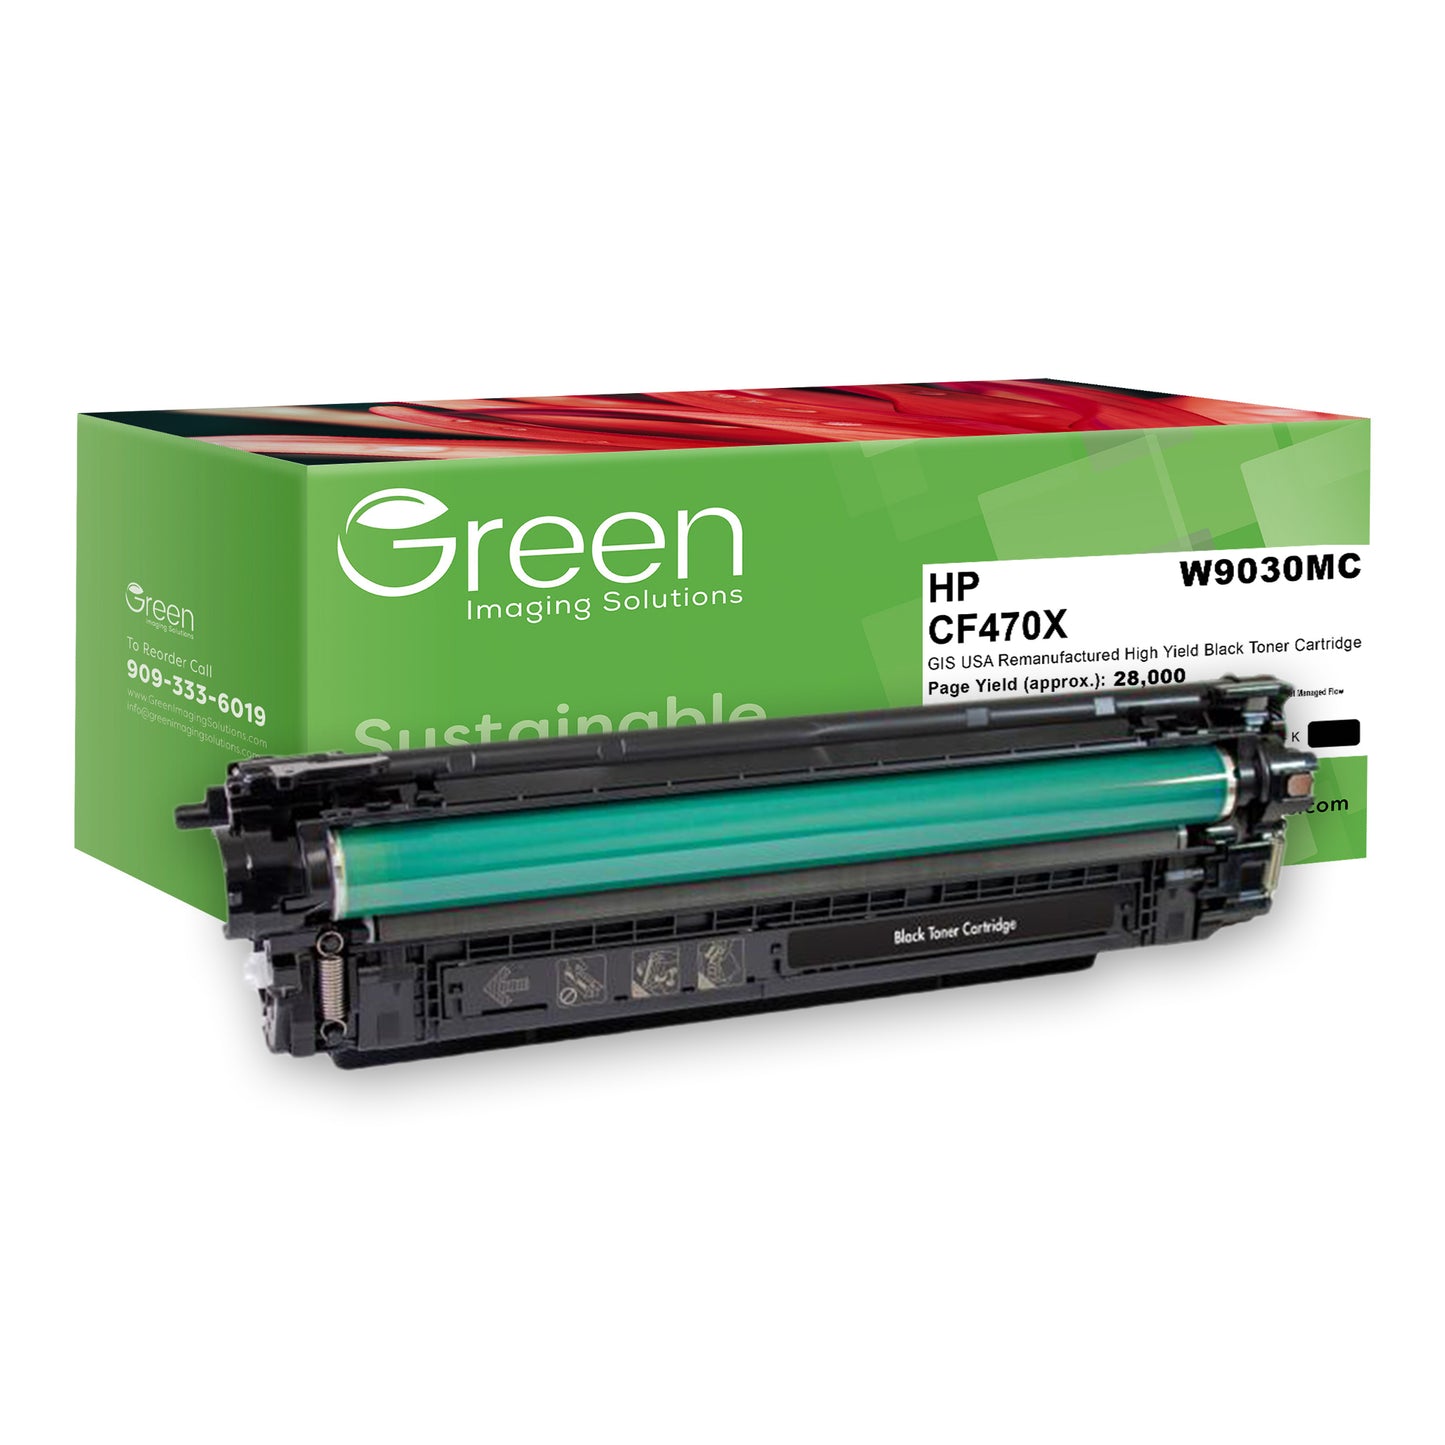 Green Imaging Solutions USA Remanufactured High Yield Black Toner Cartridge for HP 657X (CF470X/W9030MC)